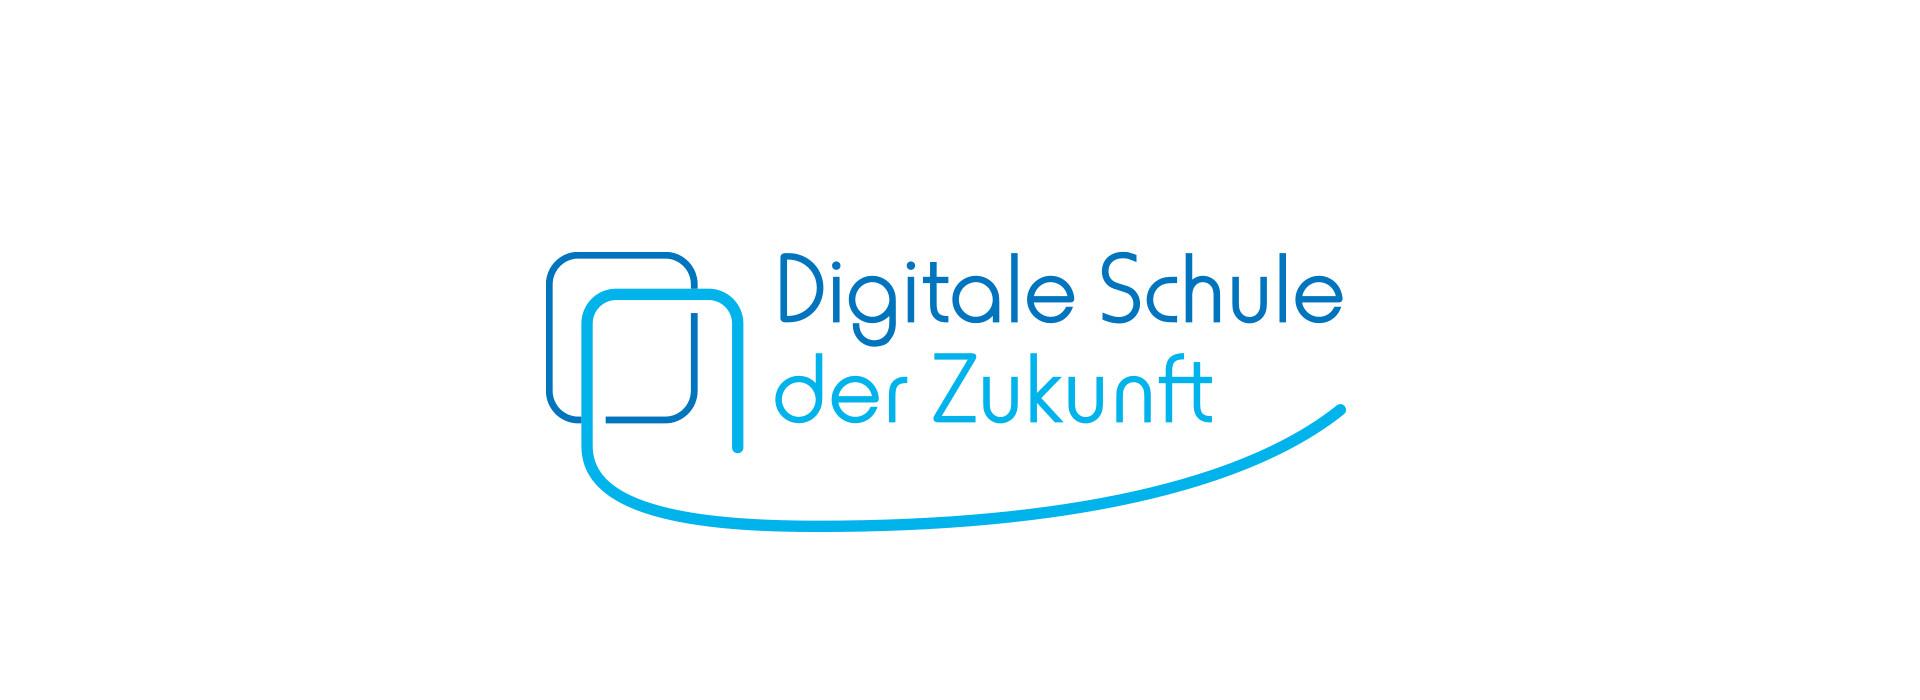 Logo Digitale Schule der Zukunft